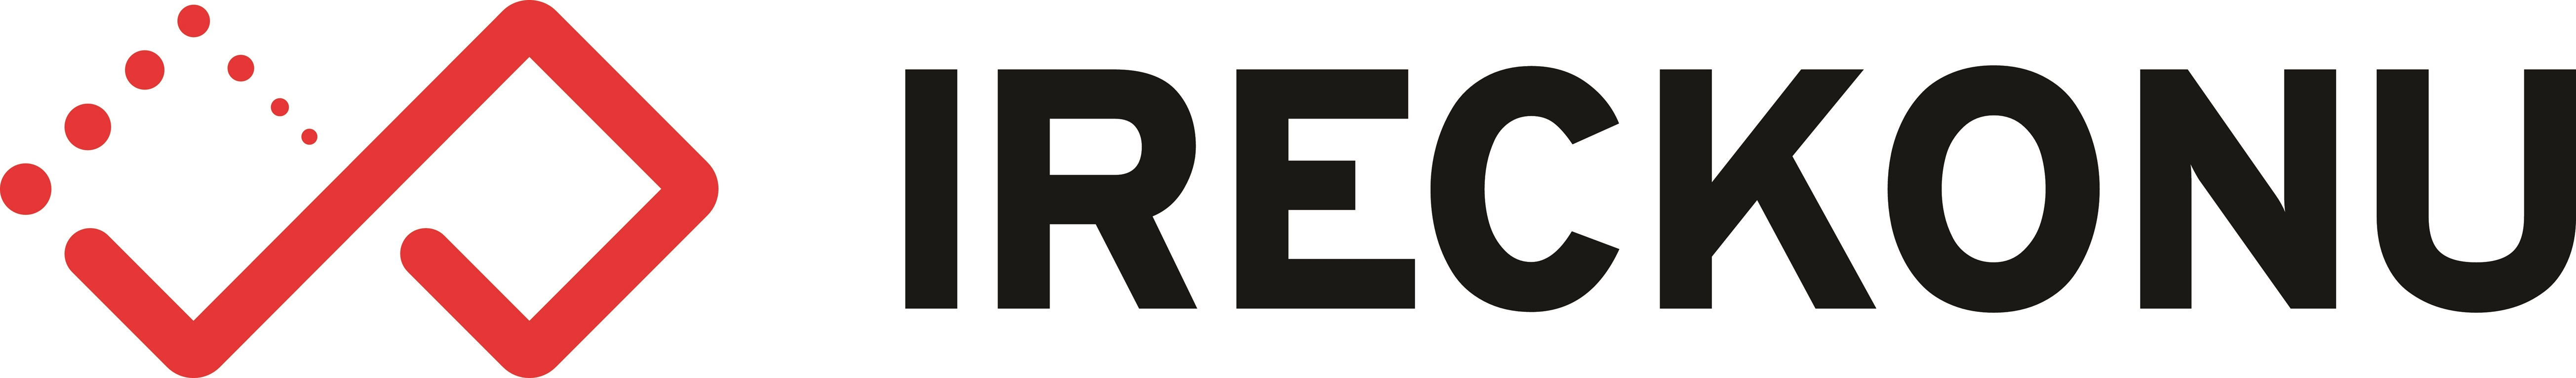 IReckonU  logo